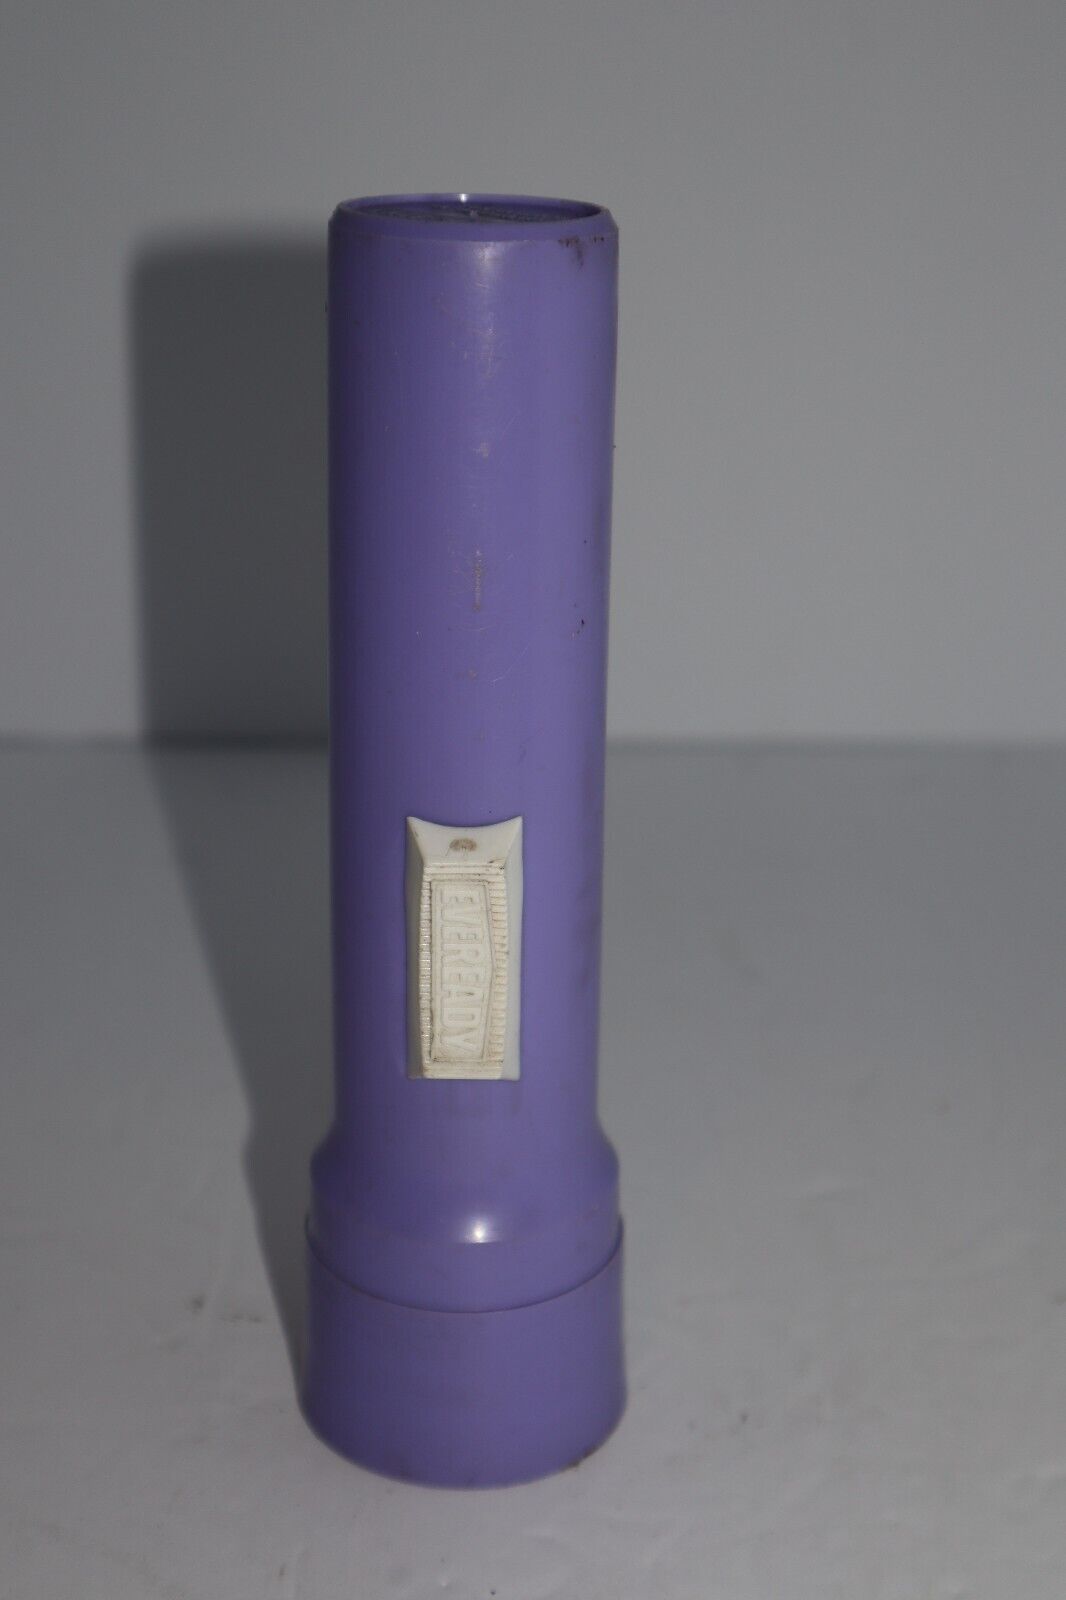 Vintage Eveready Flashlight Purple White Button Works Great